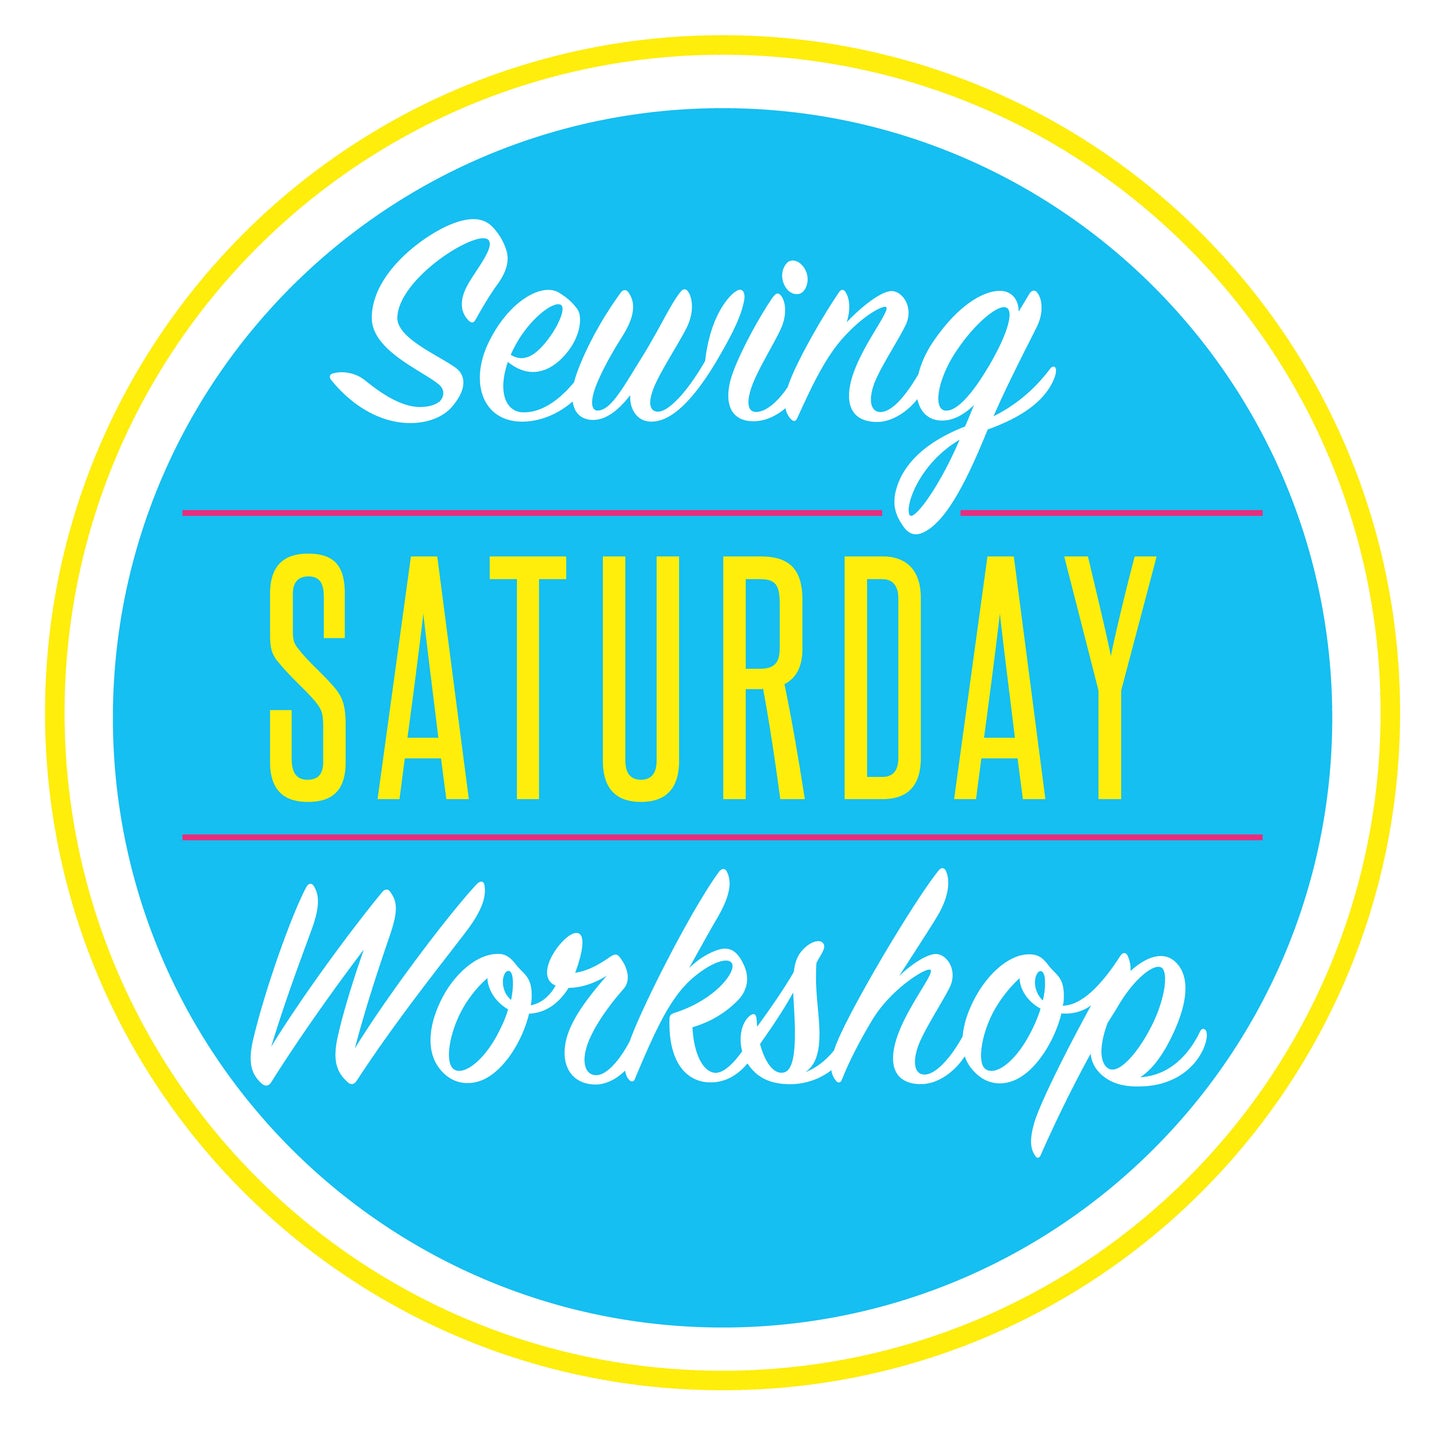 Sewing Workshop: Saturday, July 20, 9am-3pm